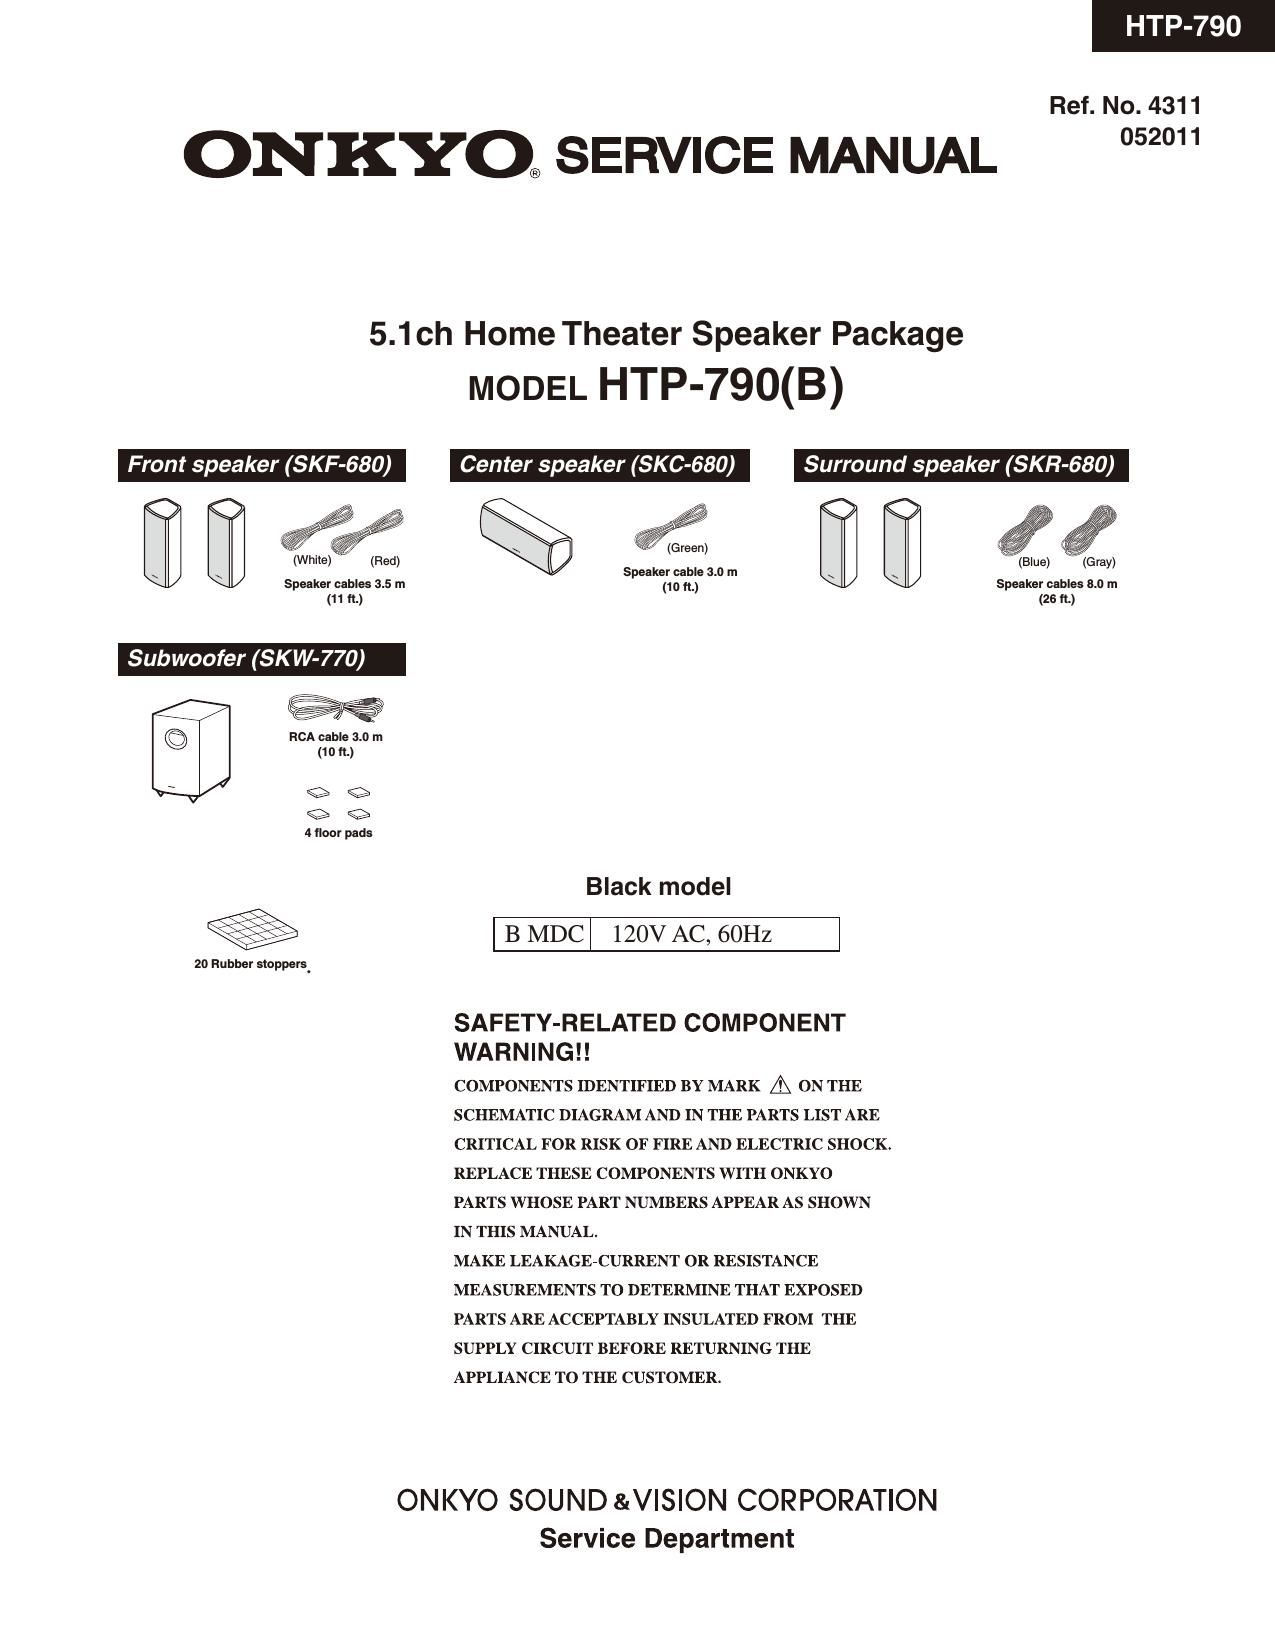 Onkyo HTP 790 Service Manual